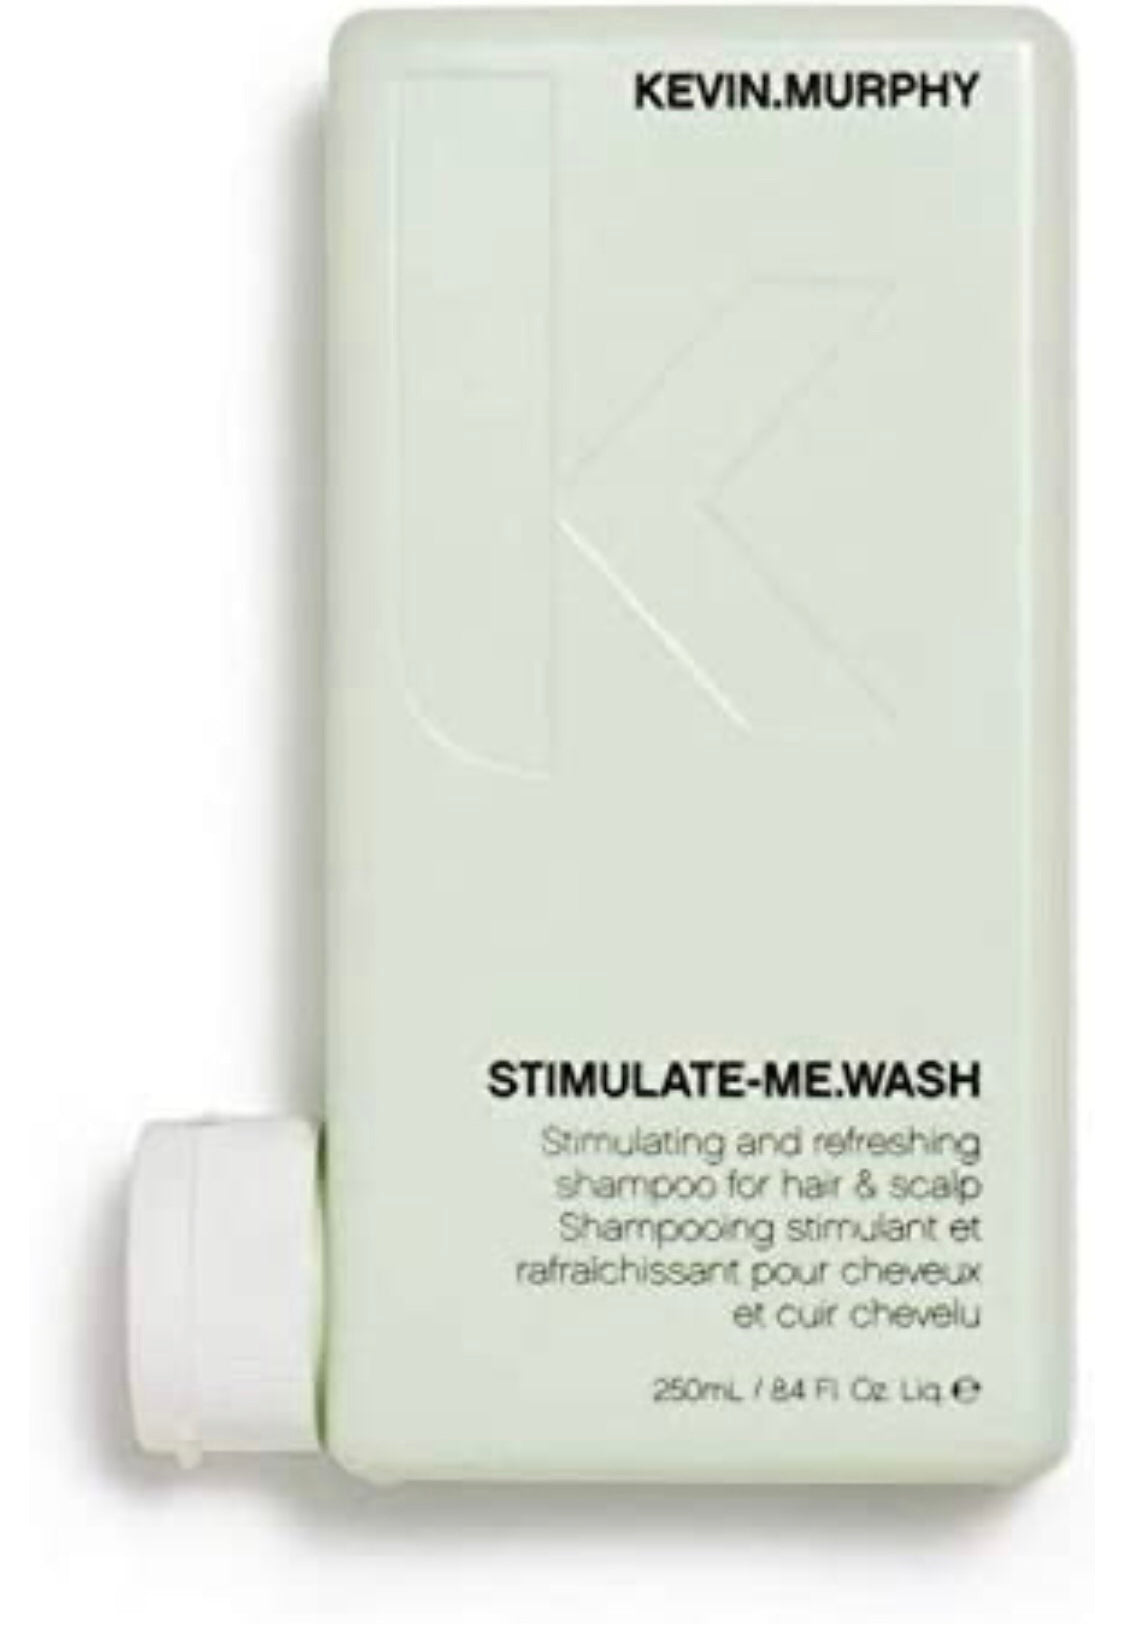 Kevin.Murphy - Stimulate-me. Wash shampoo 8.4 fl. oz. / 250 ml